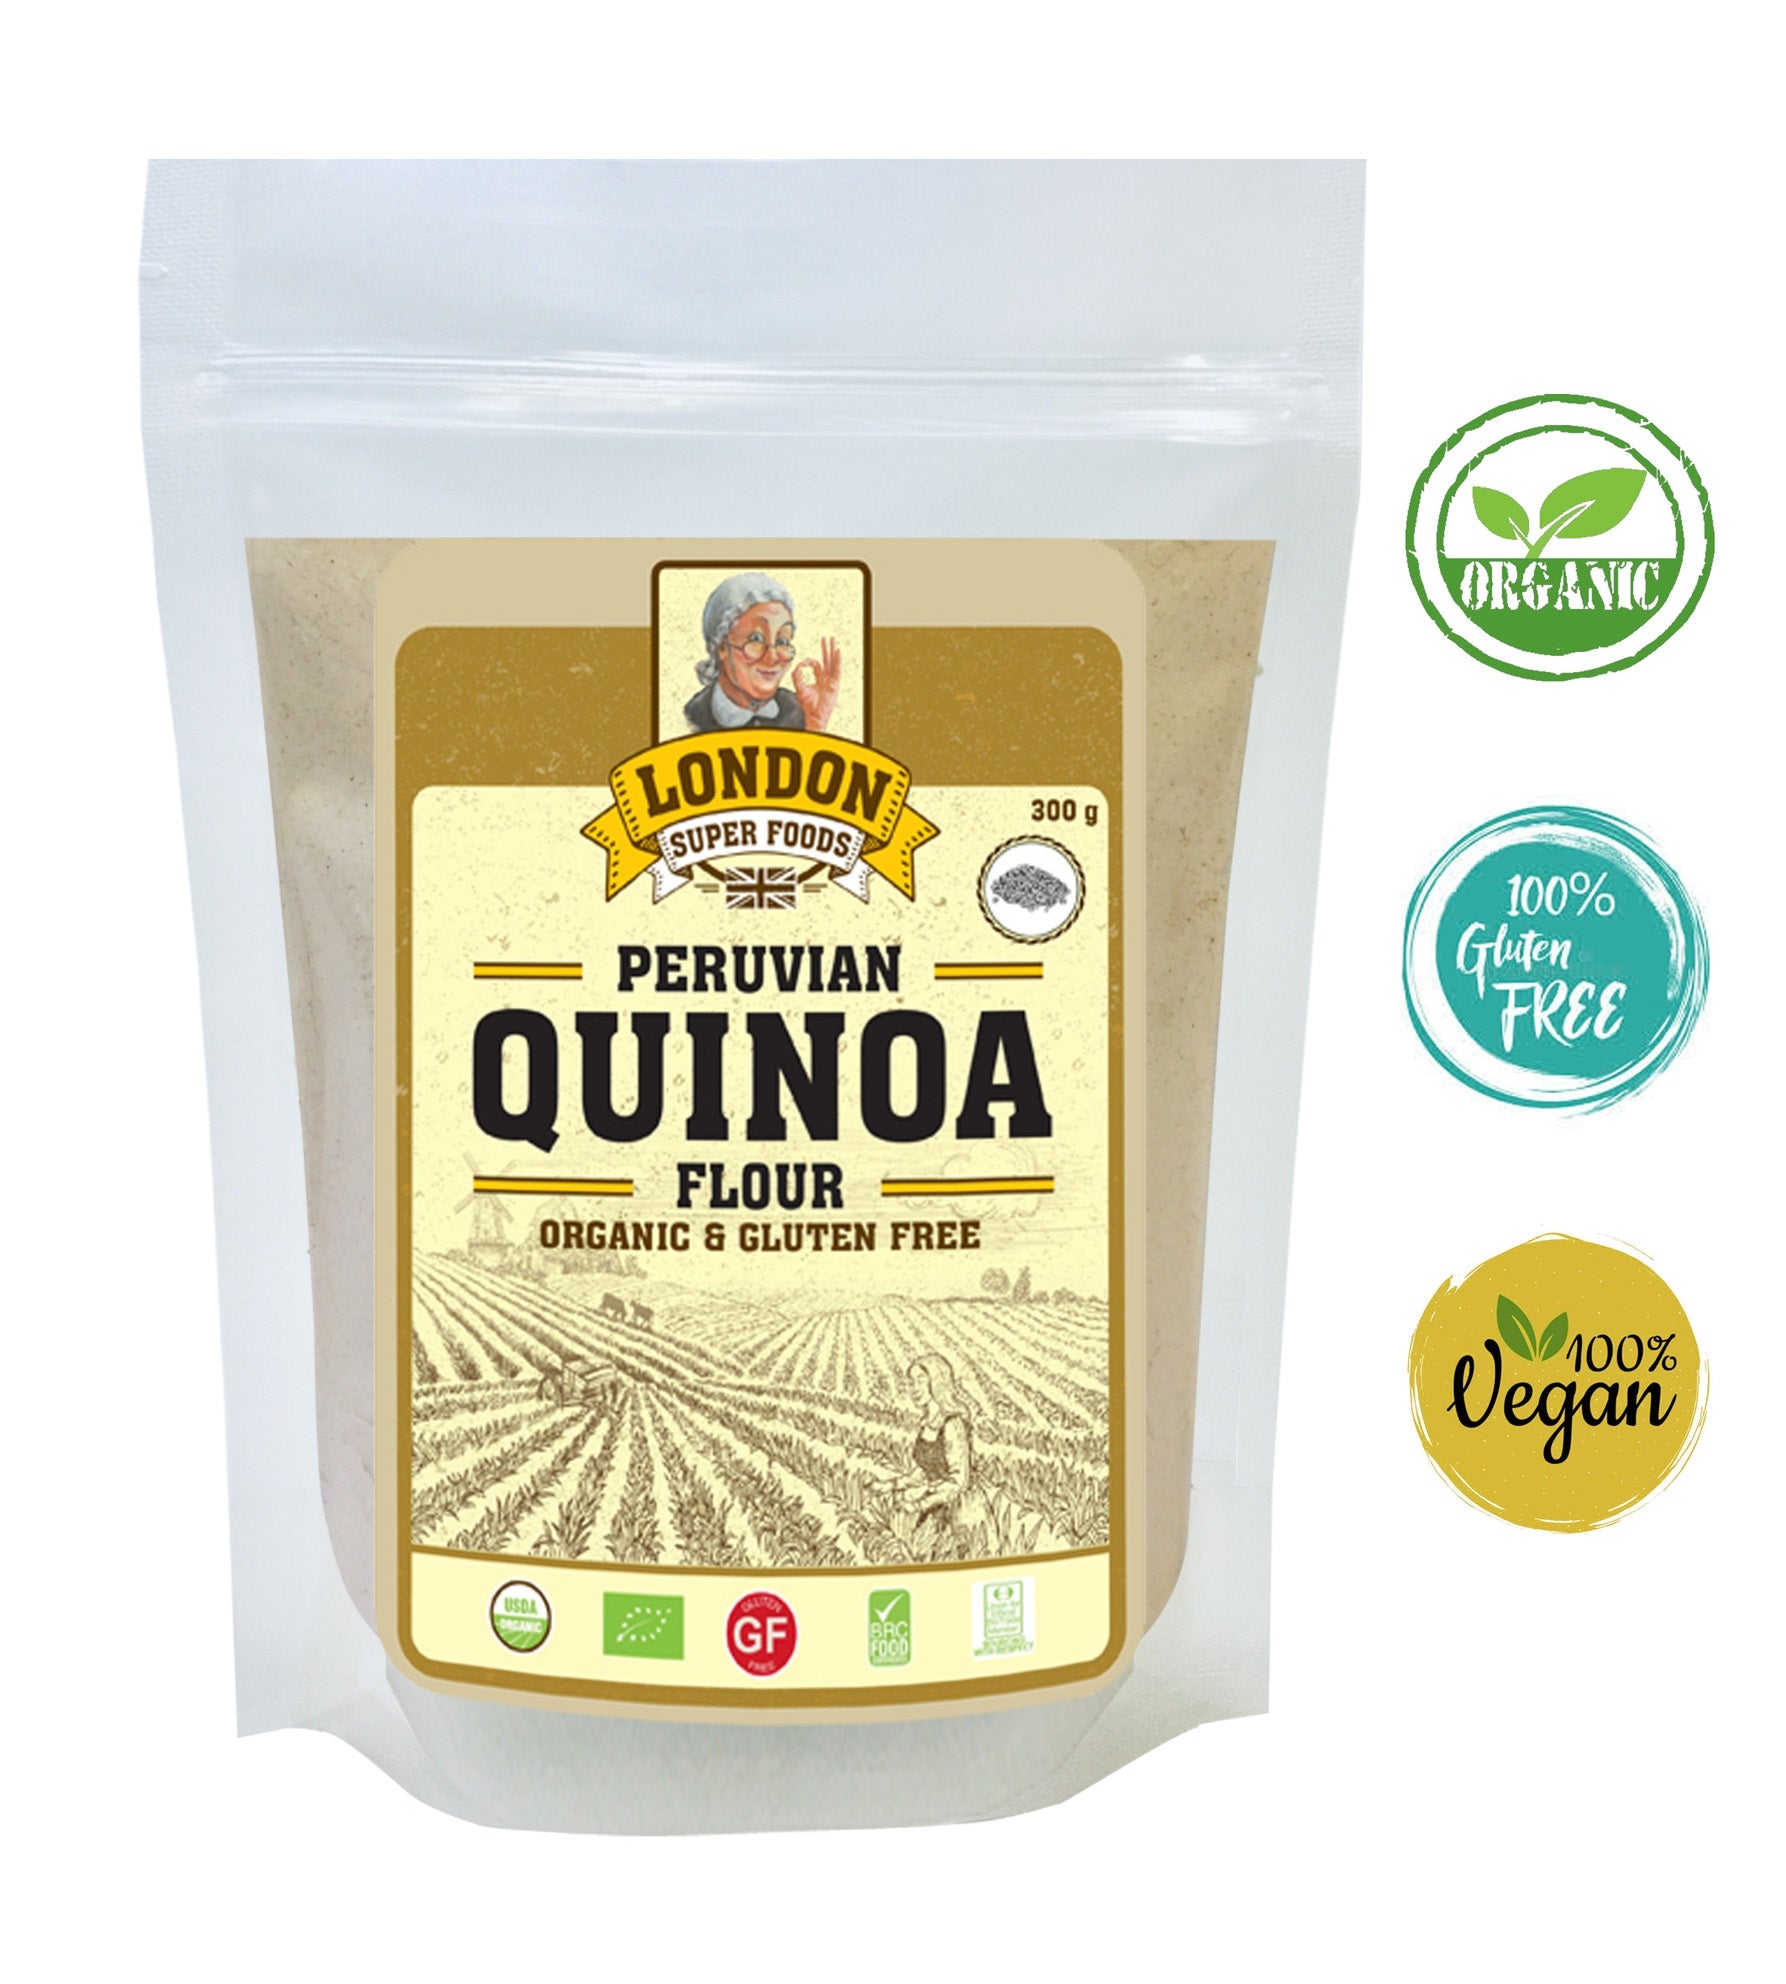 LONDON SUPER FOODS Organic Peruvian Quinoa Flour, 300g